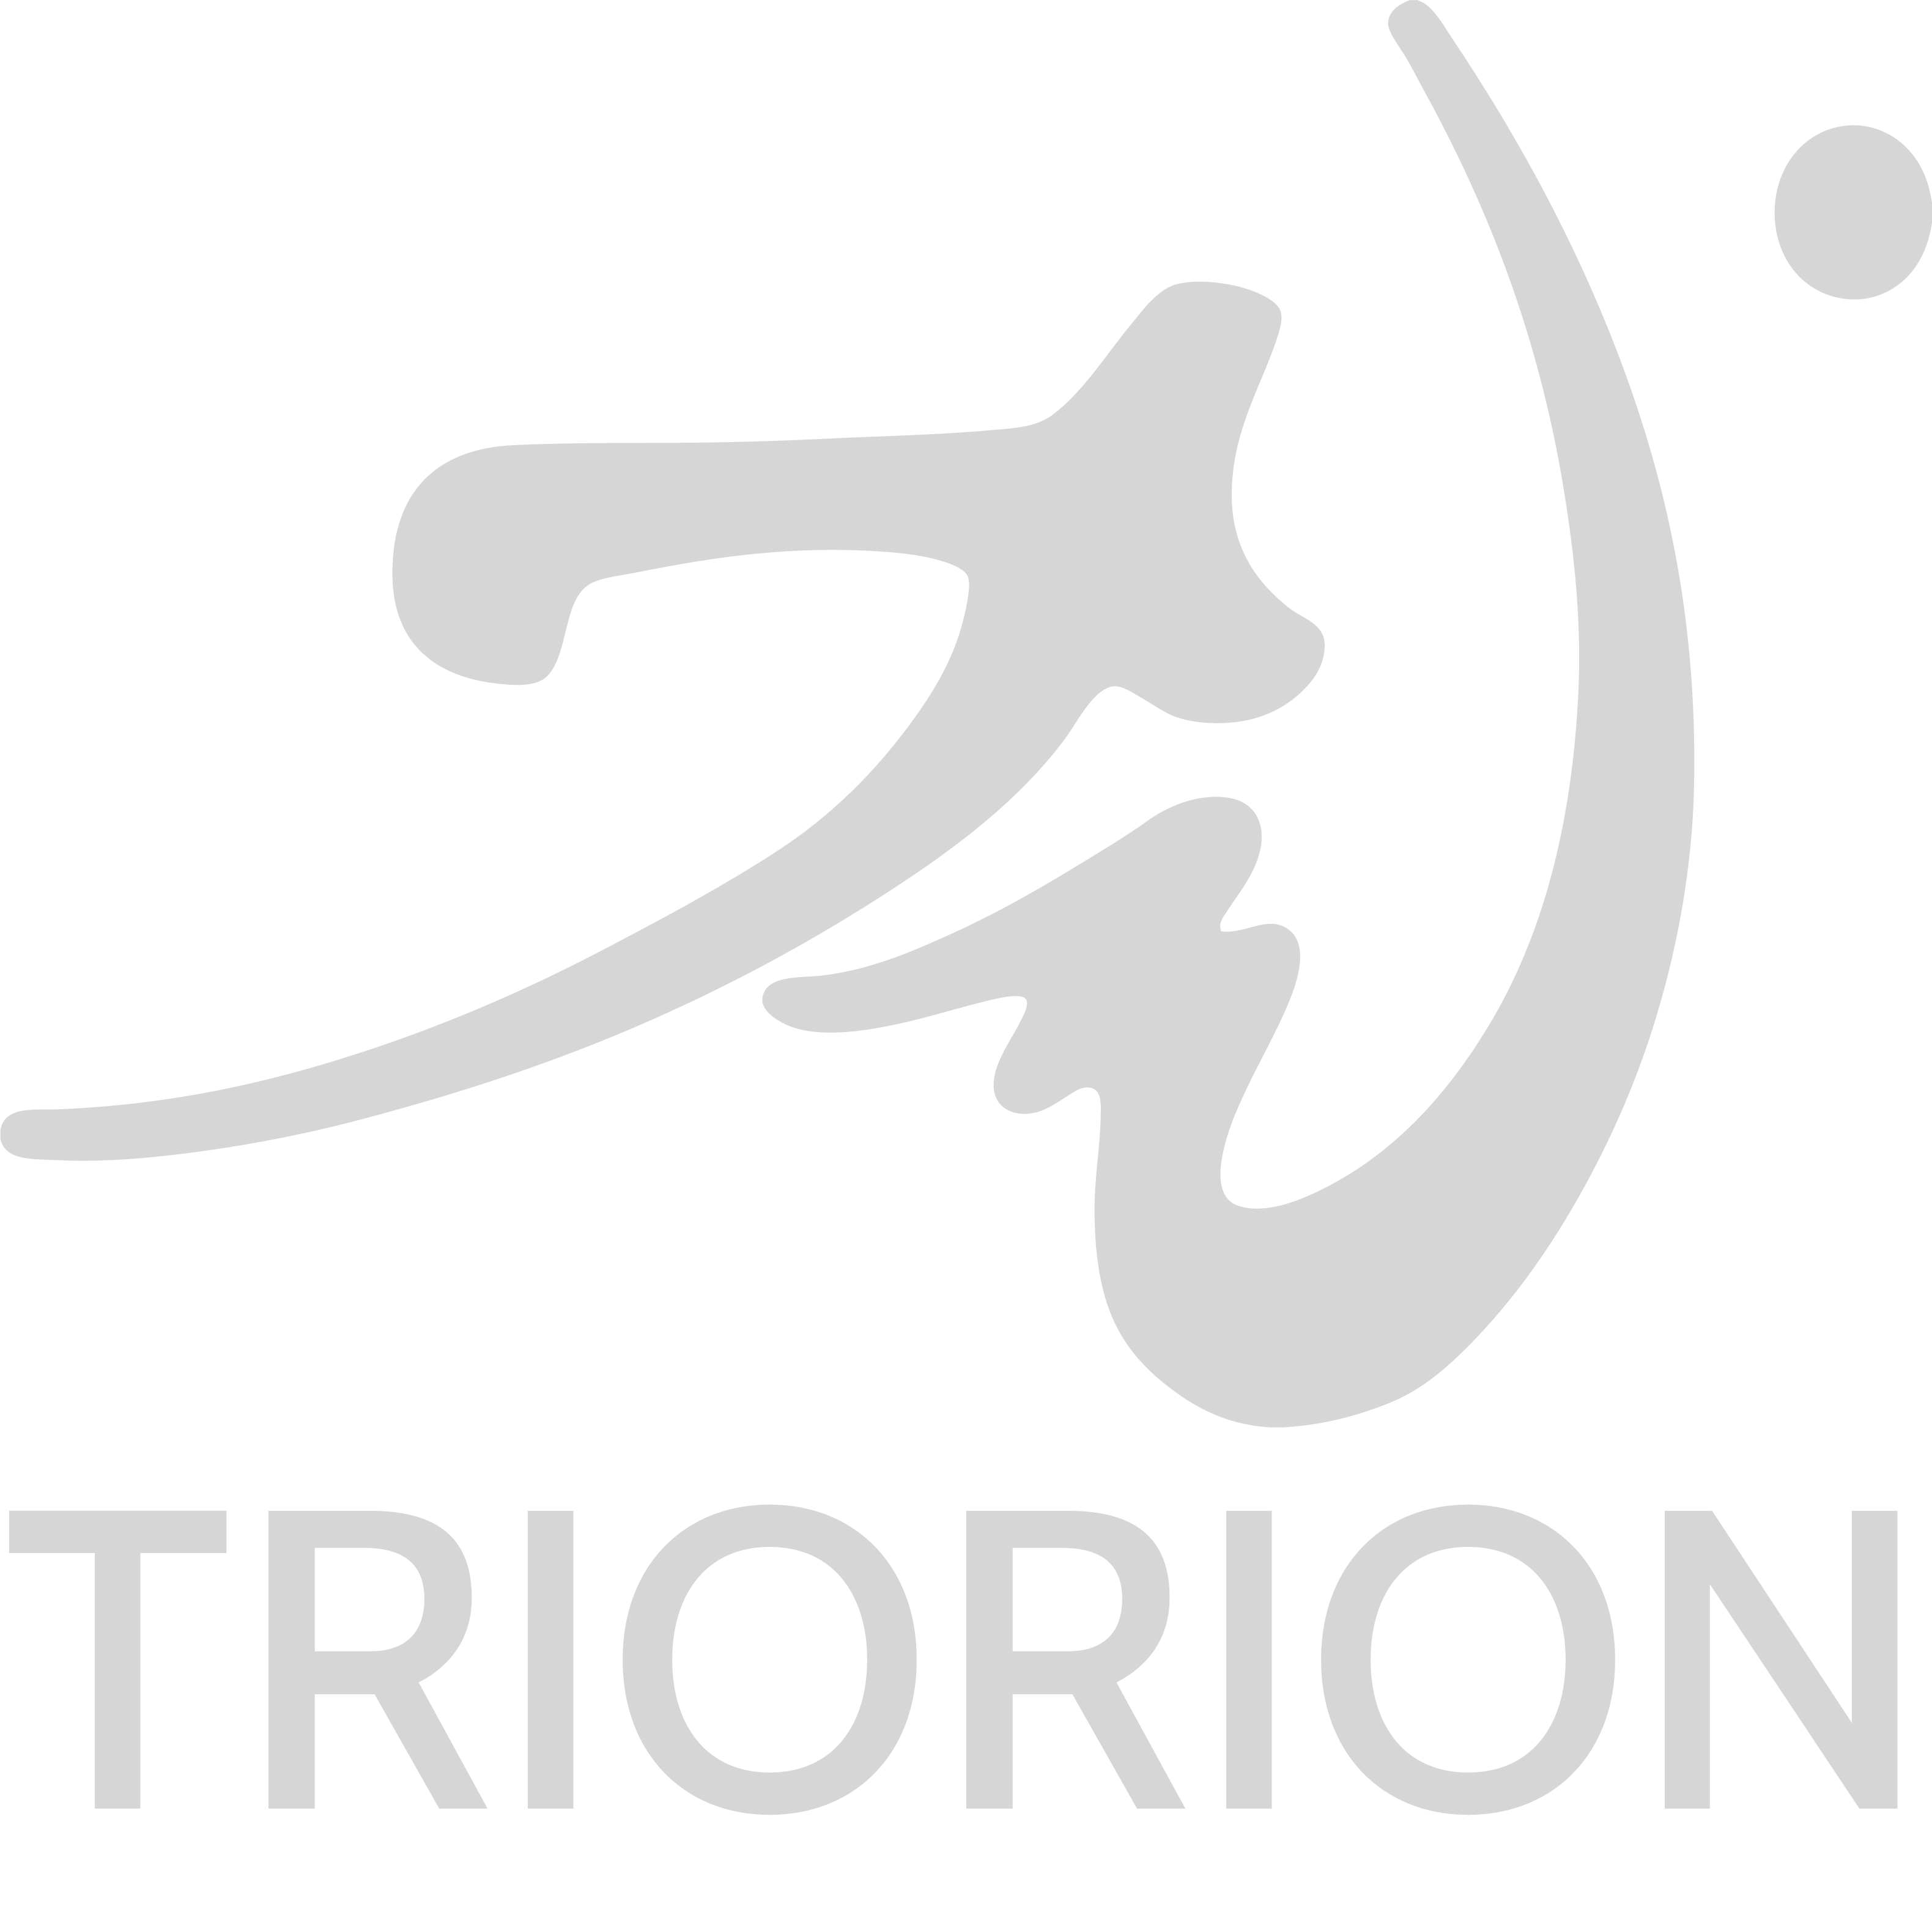 Triorion Universe Logo